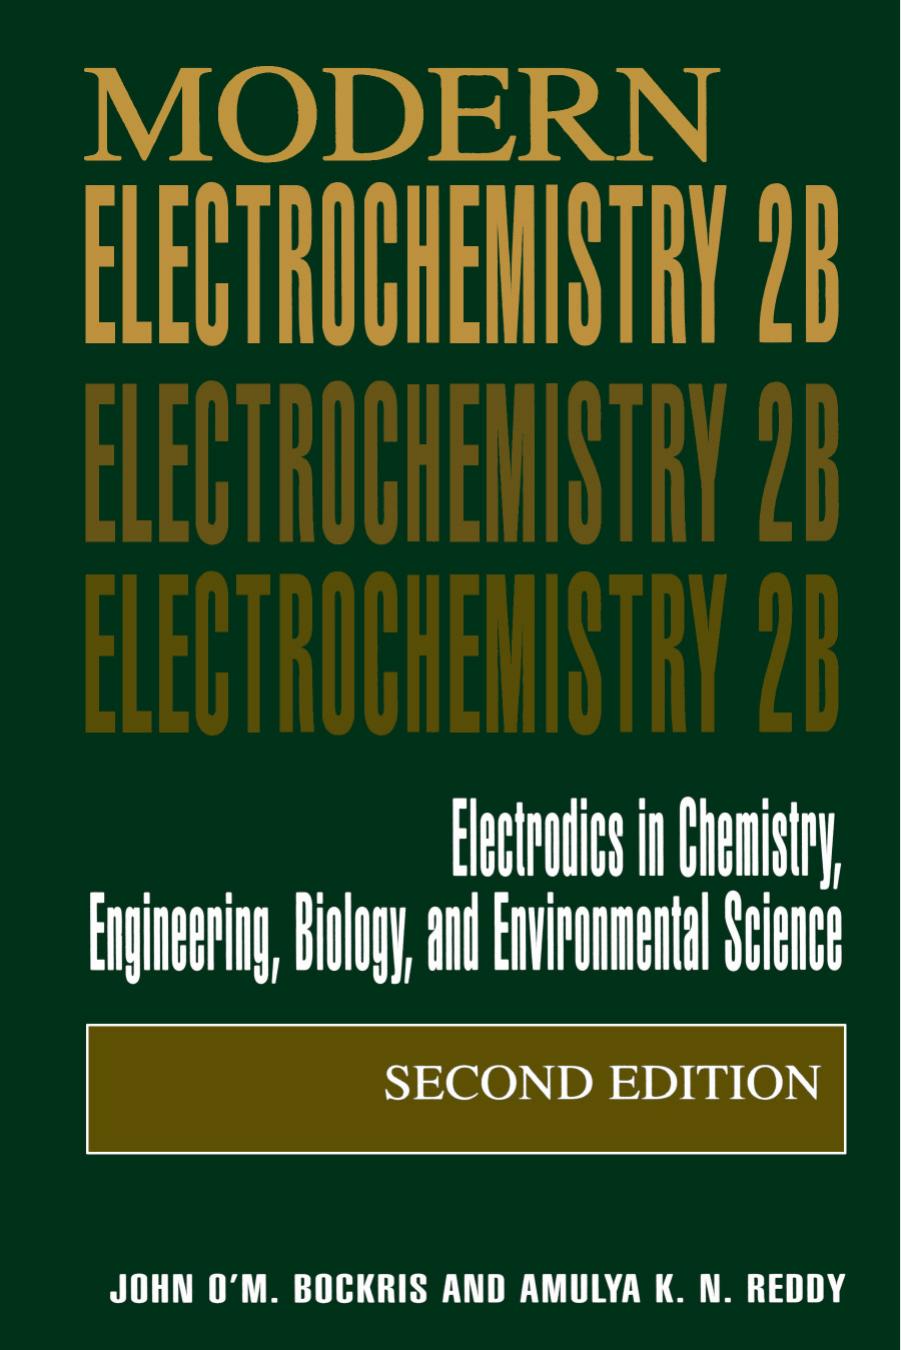 Modern Electrochemistry Vol 2B Electrodics in Chemistry, Engineering 2004